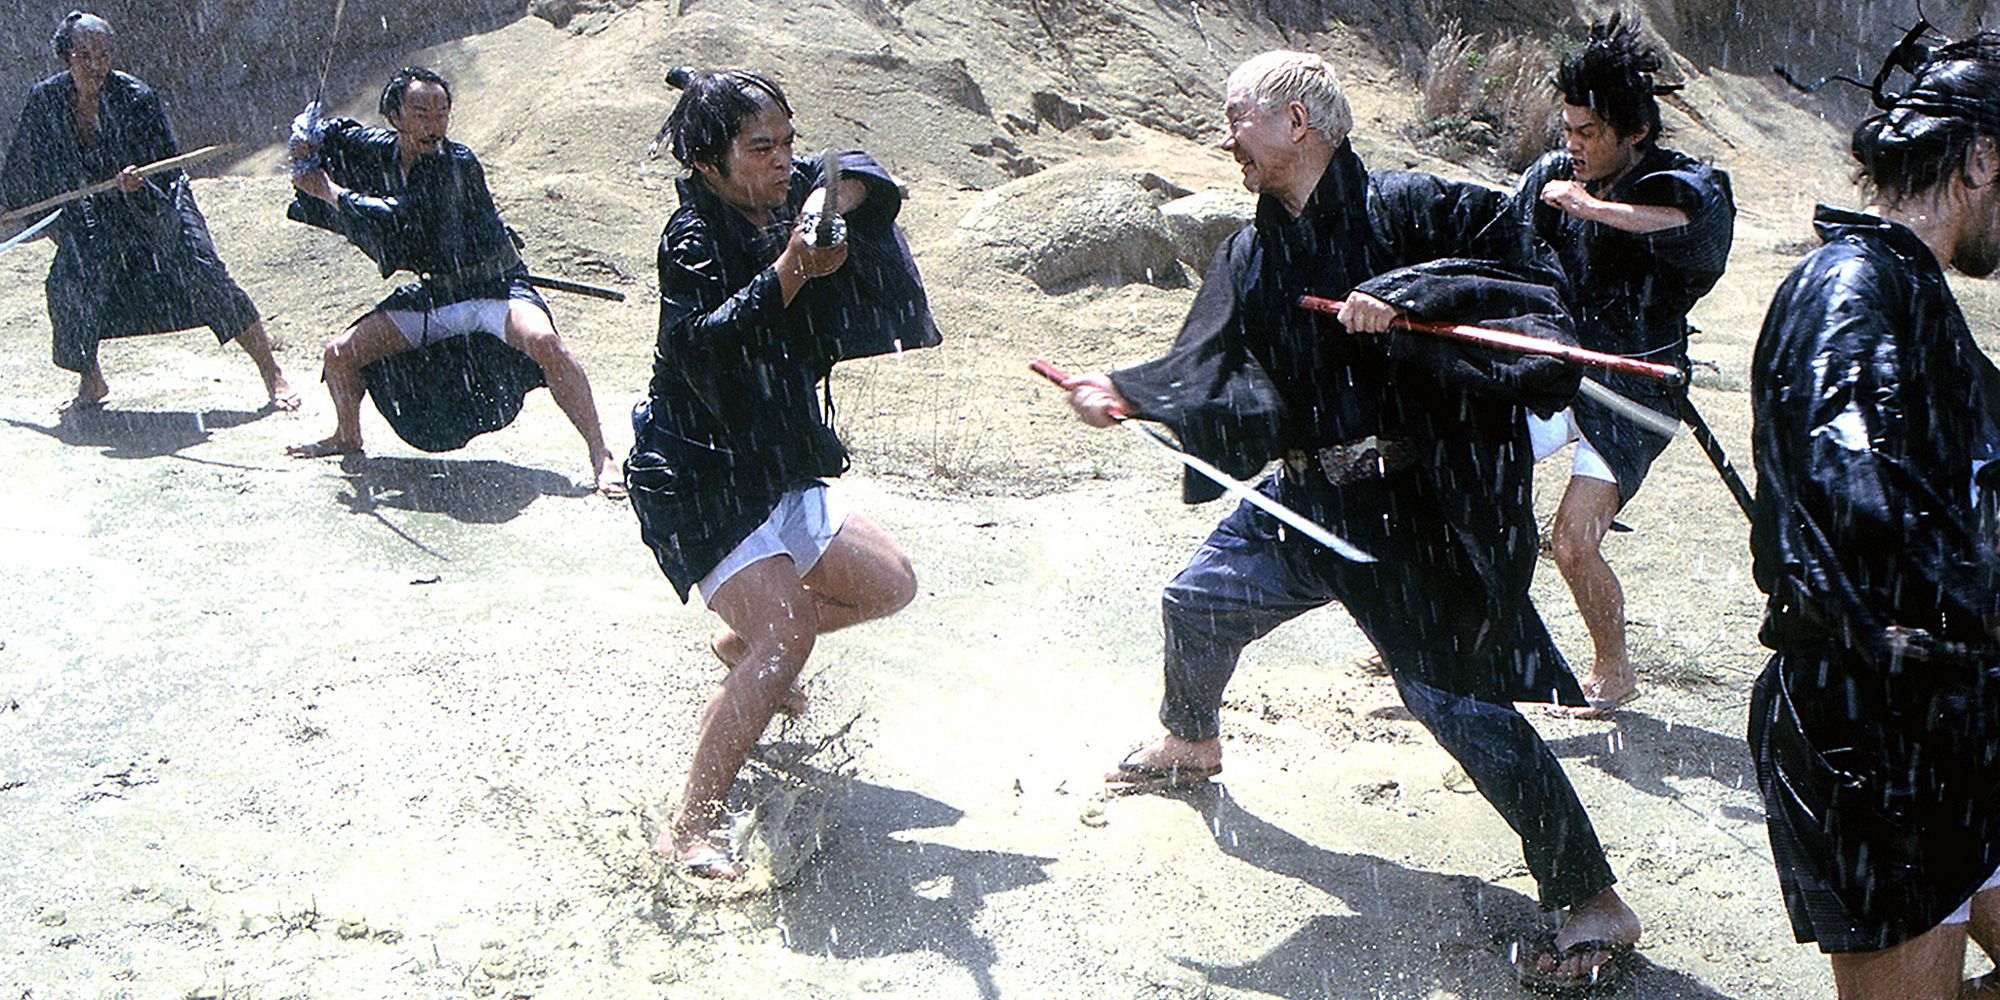 Zatoichi in a swordfight with baddies in Zatoichi